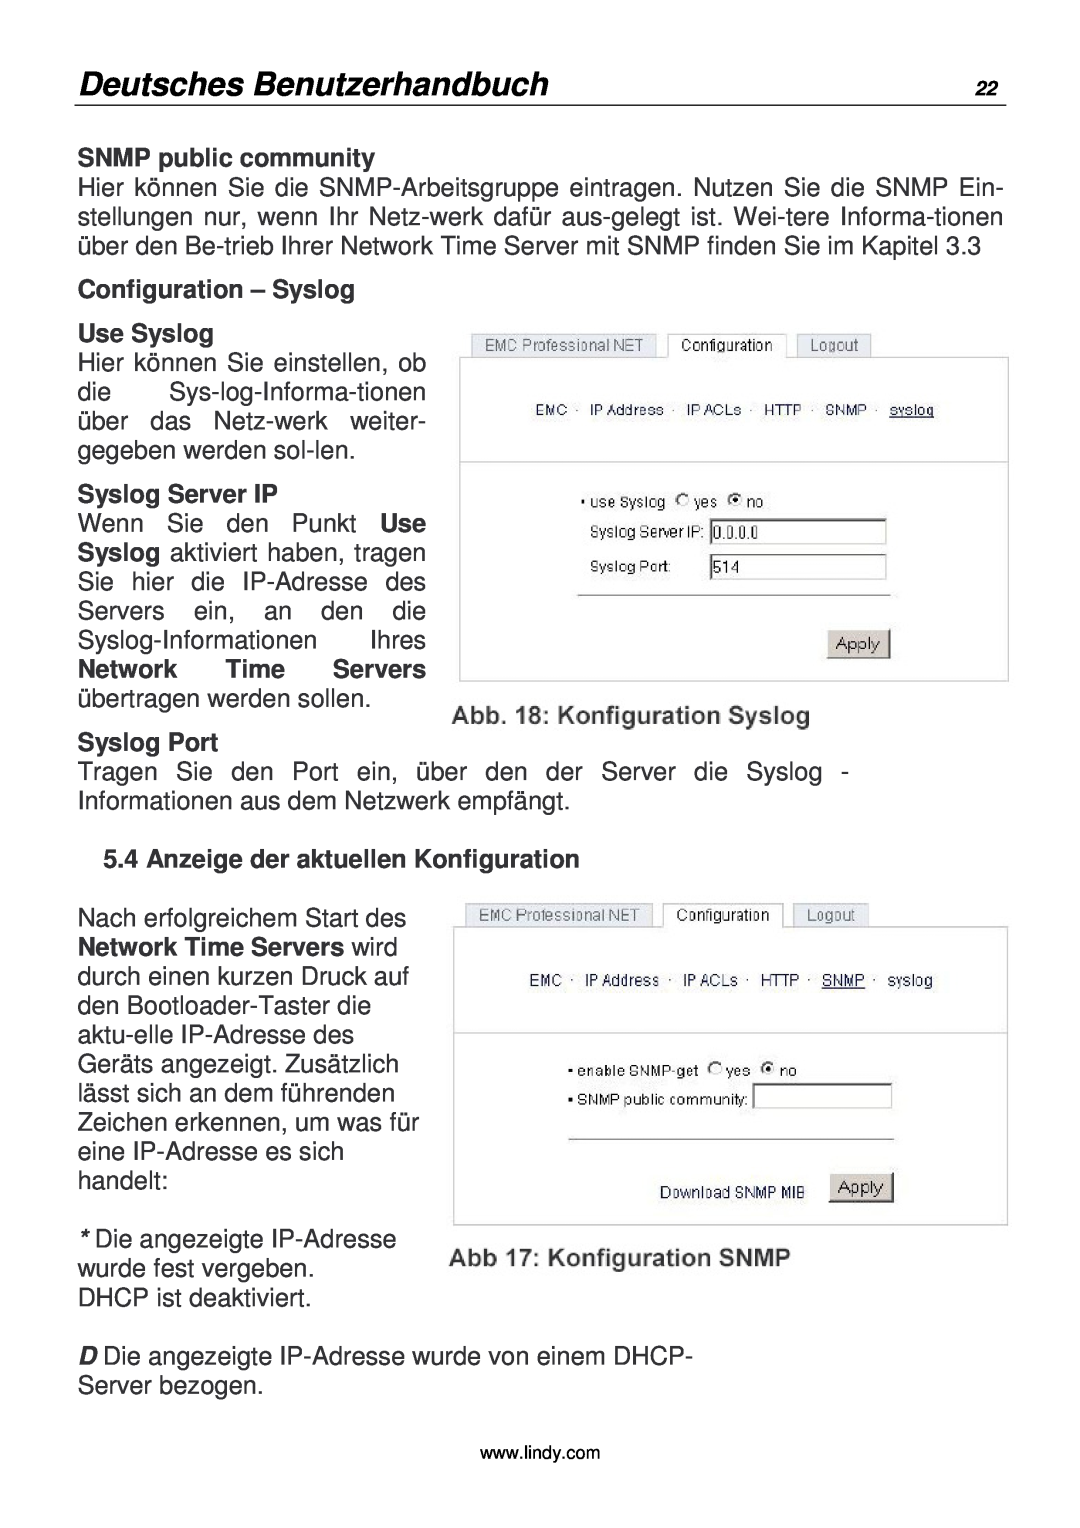 Lindy 20988 manual Deutsches Benutzerhandbuch, SNMP public community, Configuration - Syslog Use Syslog, Syslog Server IP 